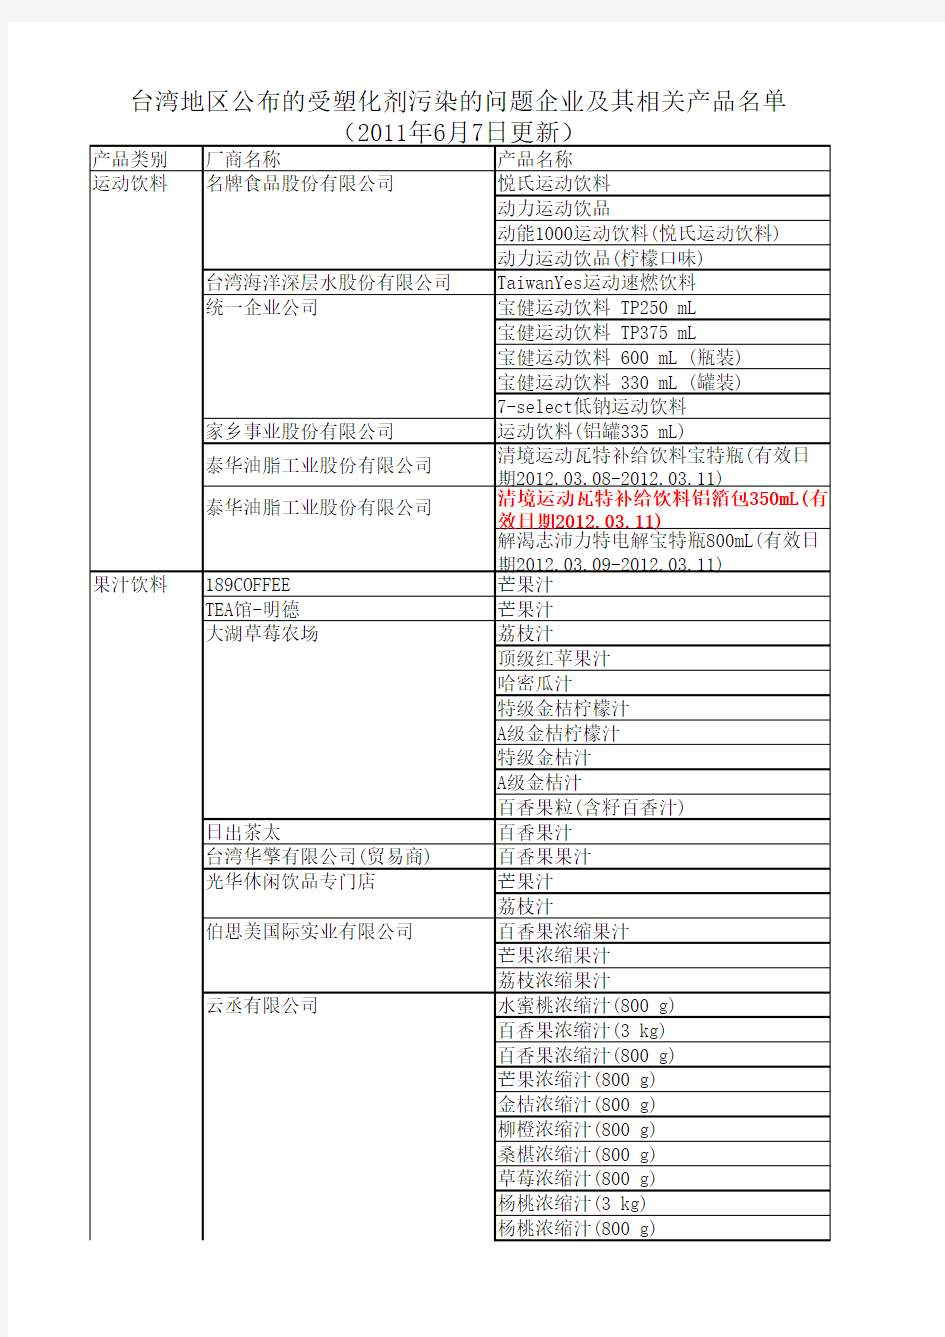 AQSIQ台湾地区公布的受塑化剂污染的问题企业及其+相关产品名单(2011年6月7日更新)